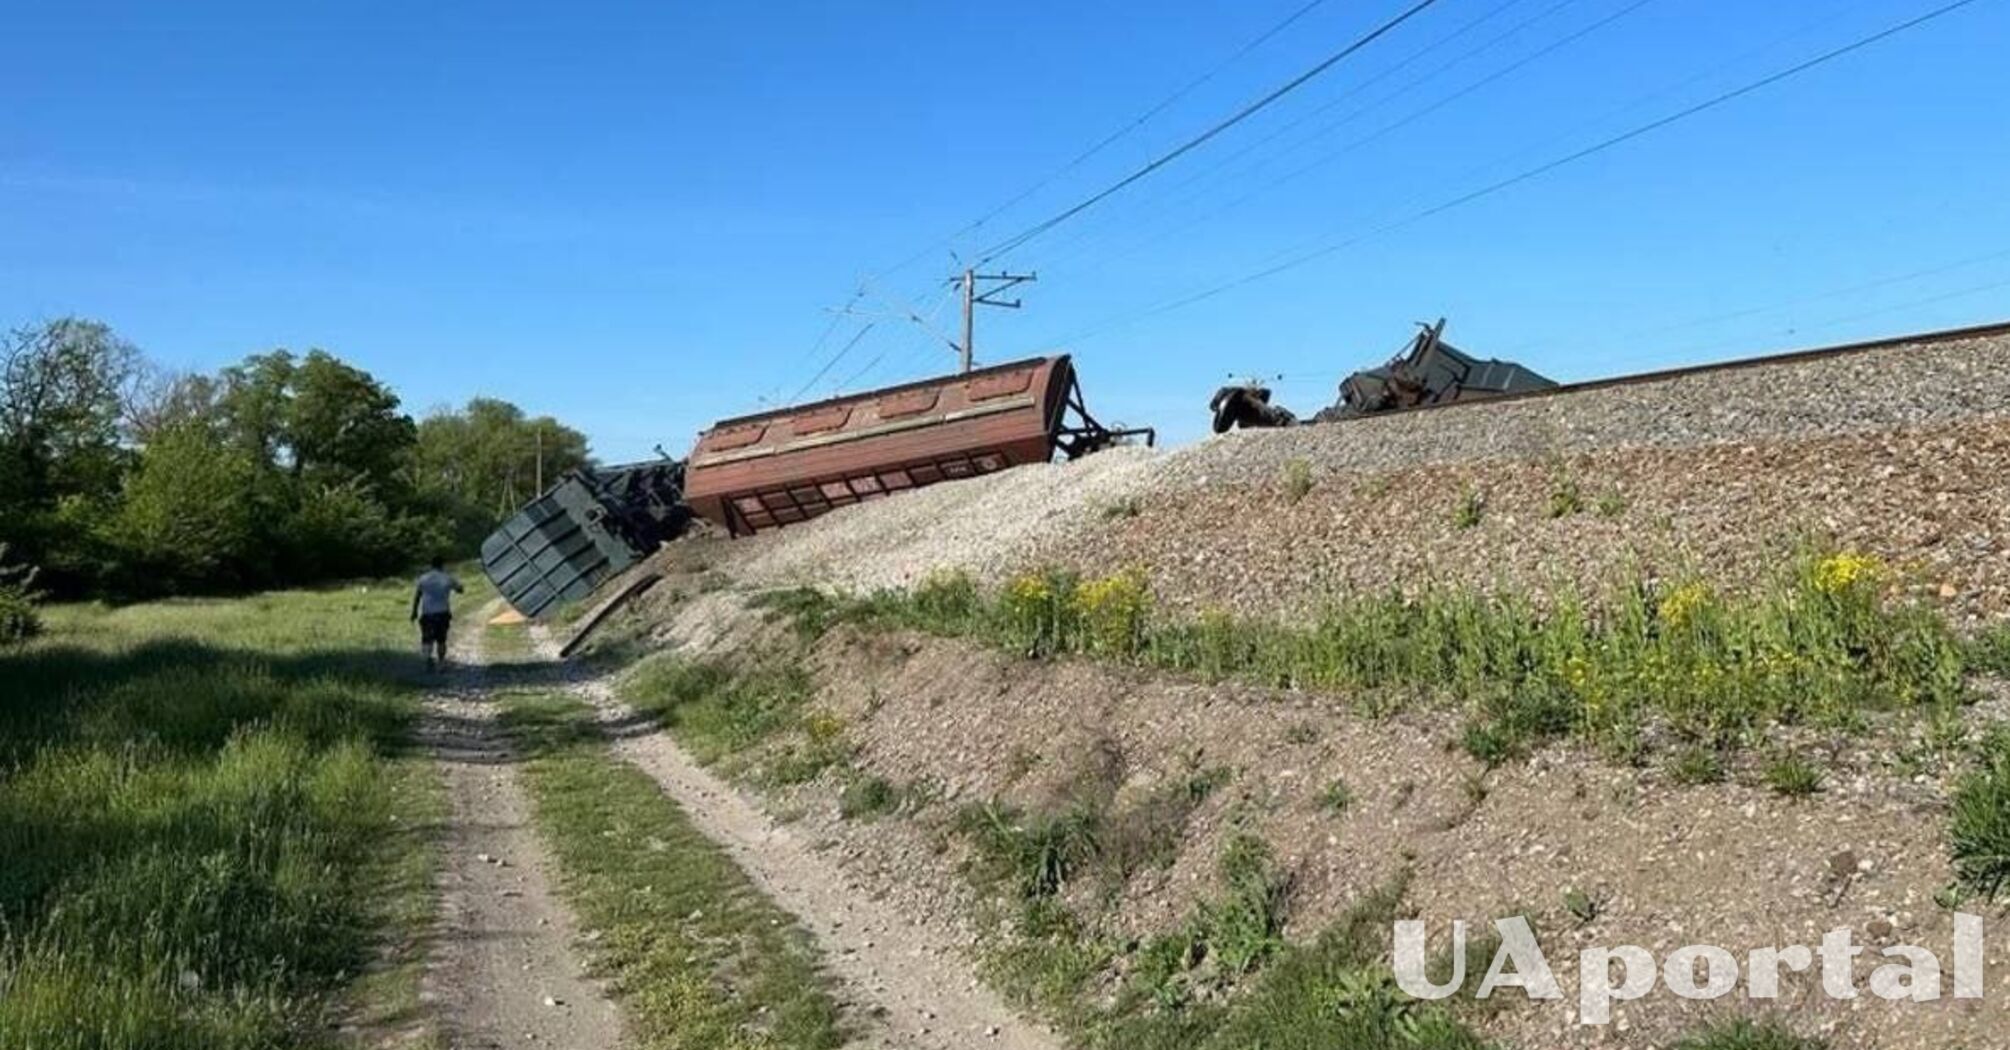 Railway blown up in Crimea near Bakhchisarai: wagons derailed (photos)